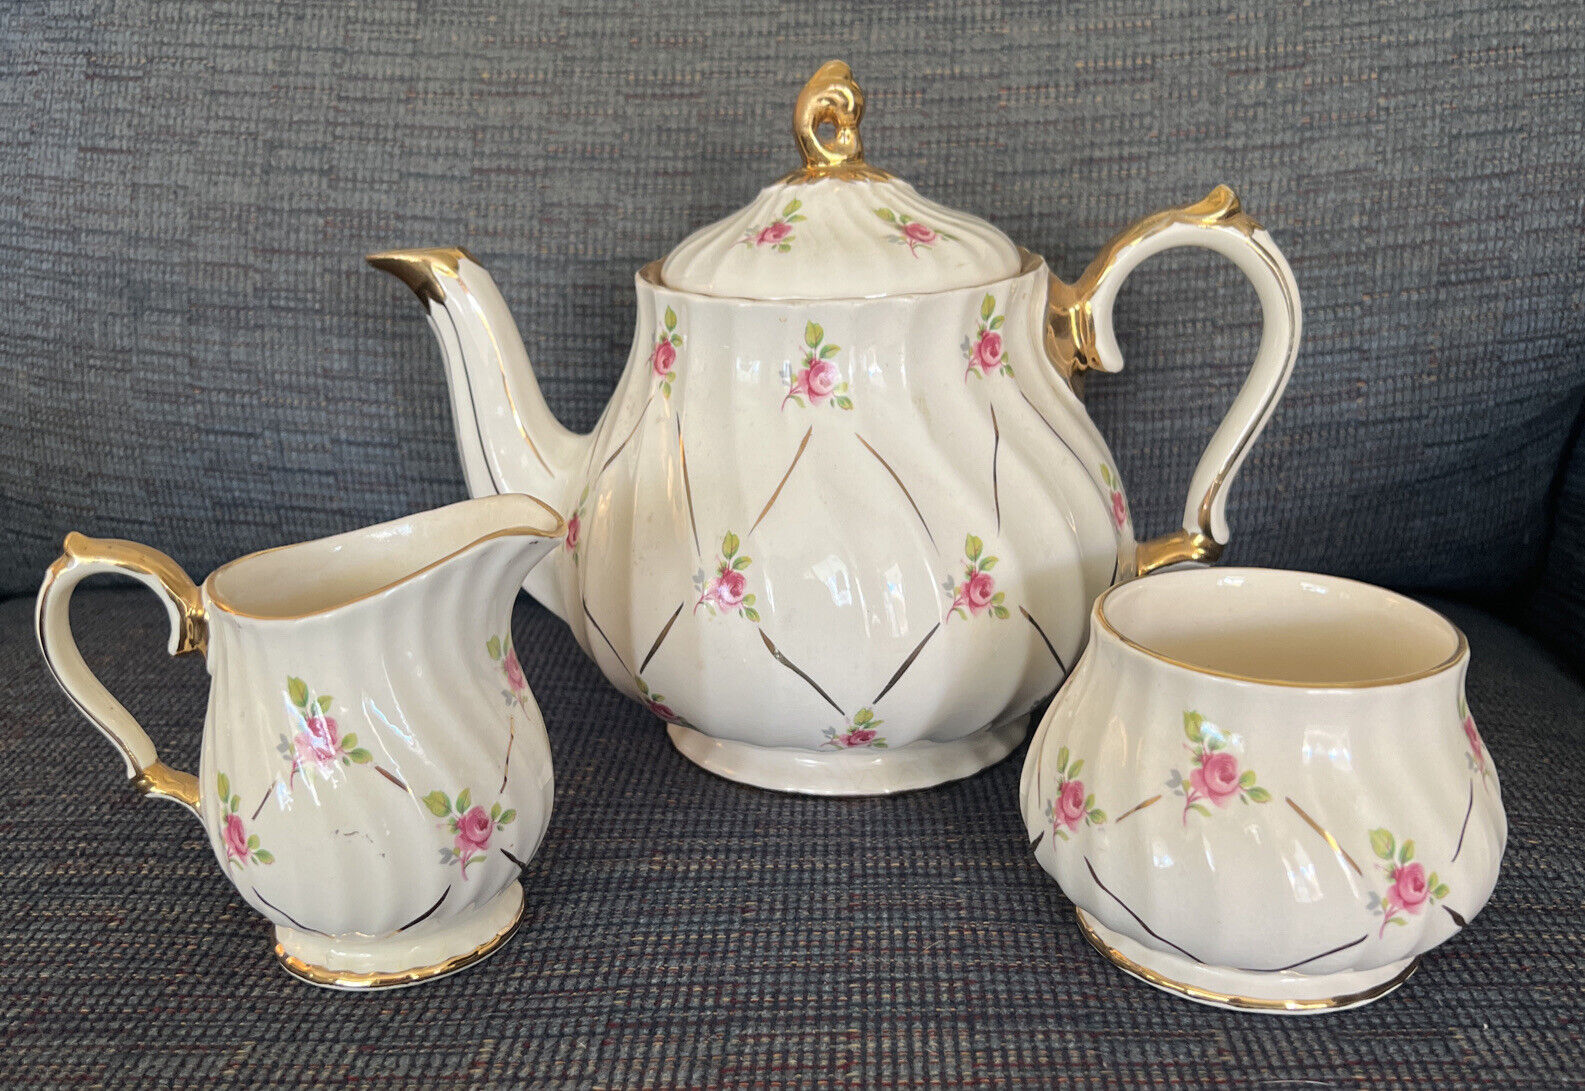 Vintage Sadler Rose tea set-  teapot, creamer/milk jug, and sugar bowl